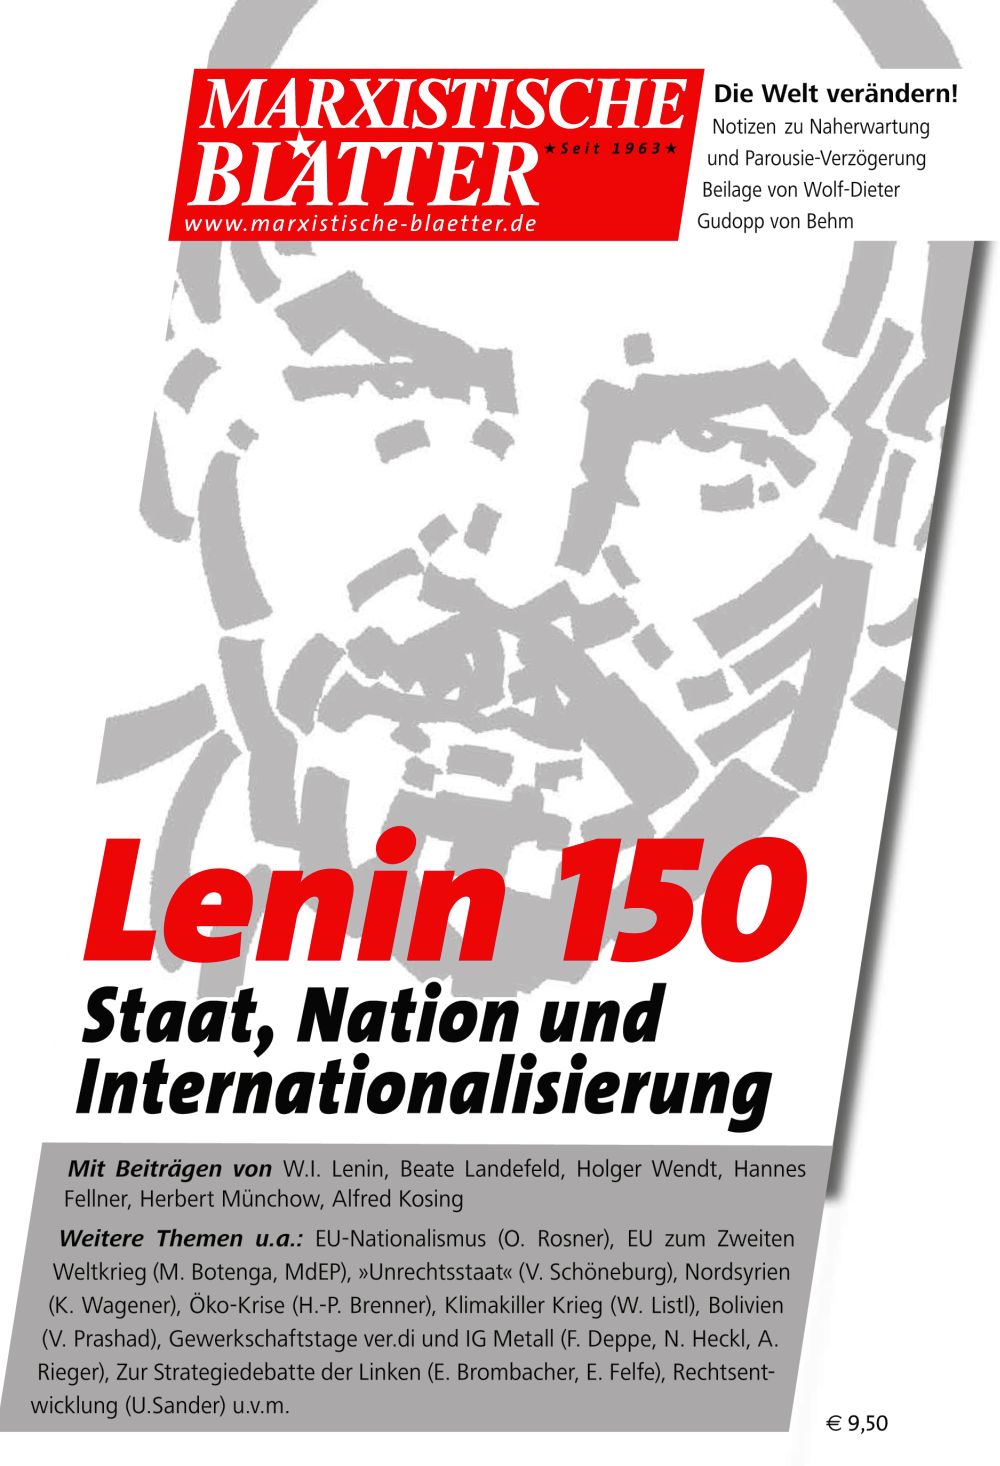 2020 - „Unser Lenin-Jahr 2020 ist eröffnet“ - UZ vom 10. Januar 2020 - UZ vom 10. Januar 2020